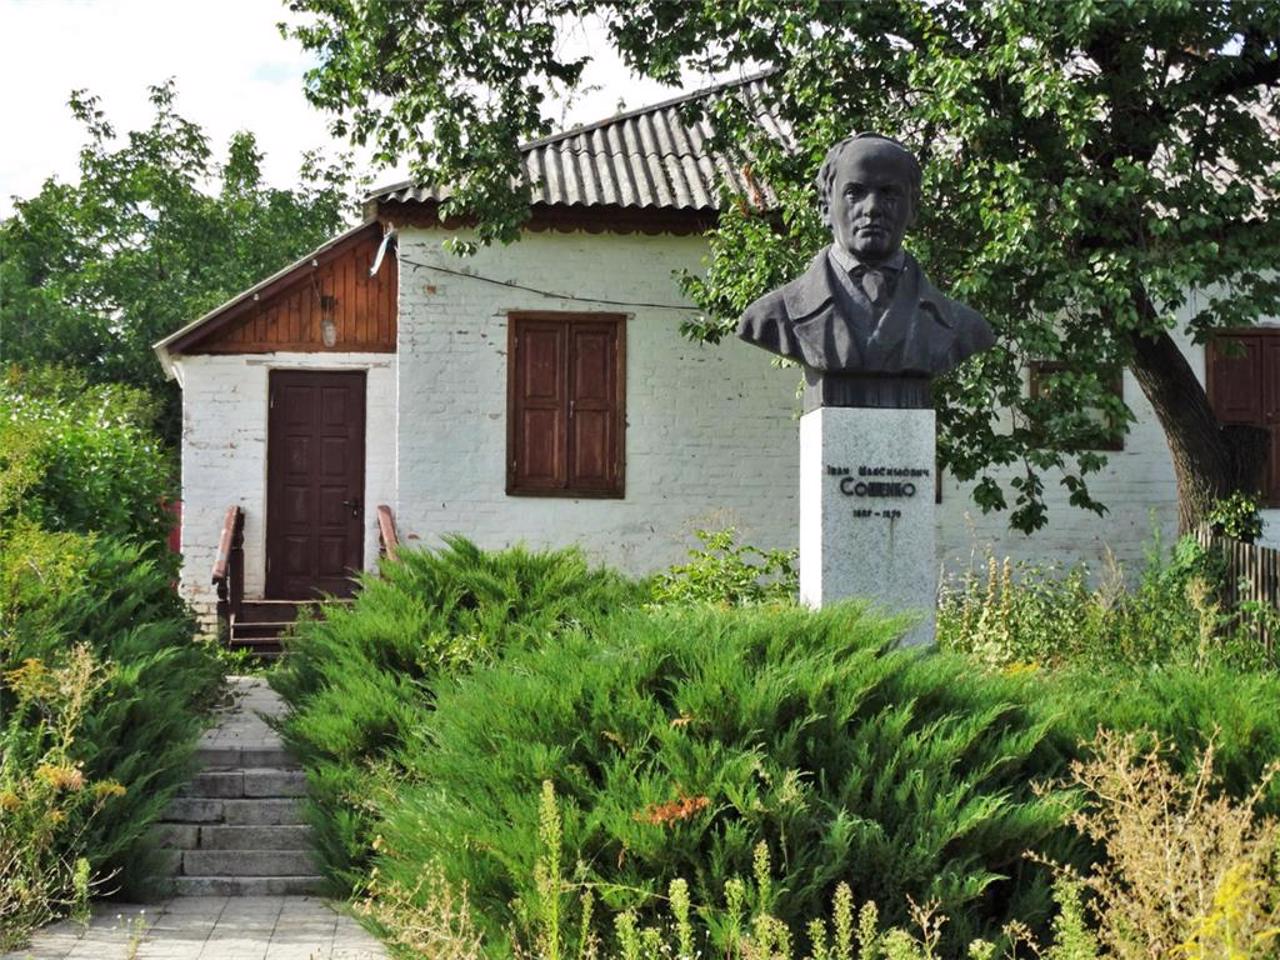 Ivan Soshenko Museum, Bohuslav